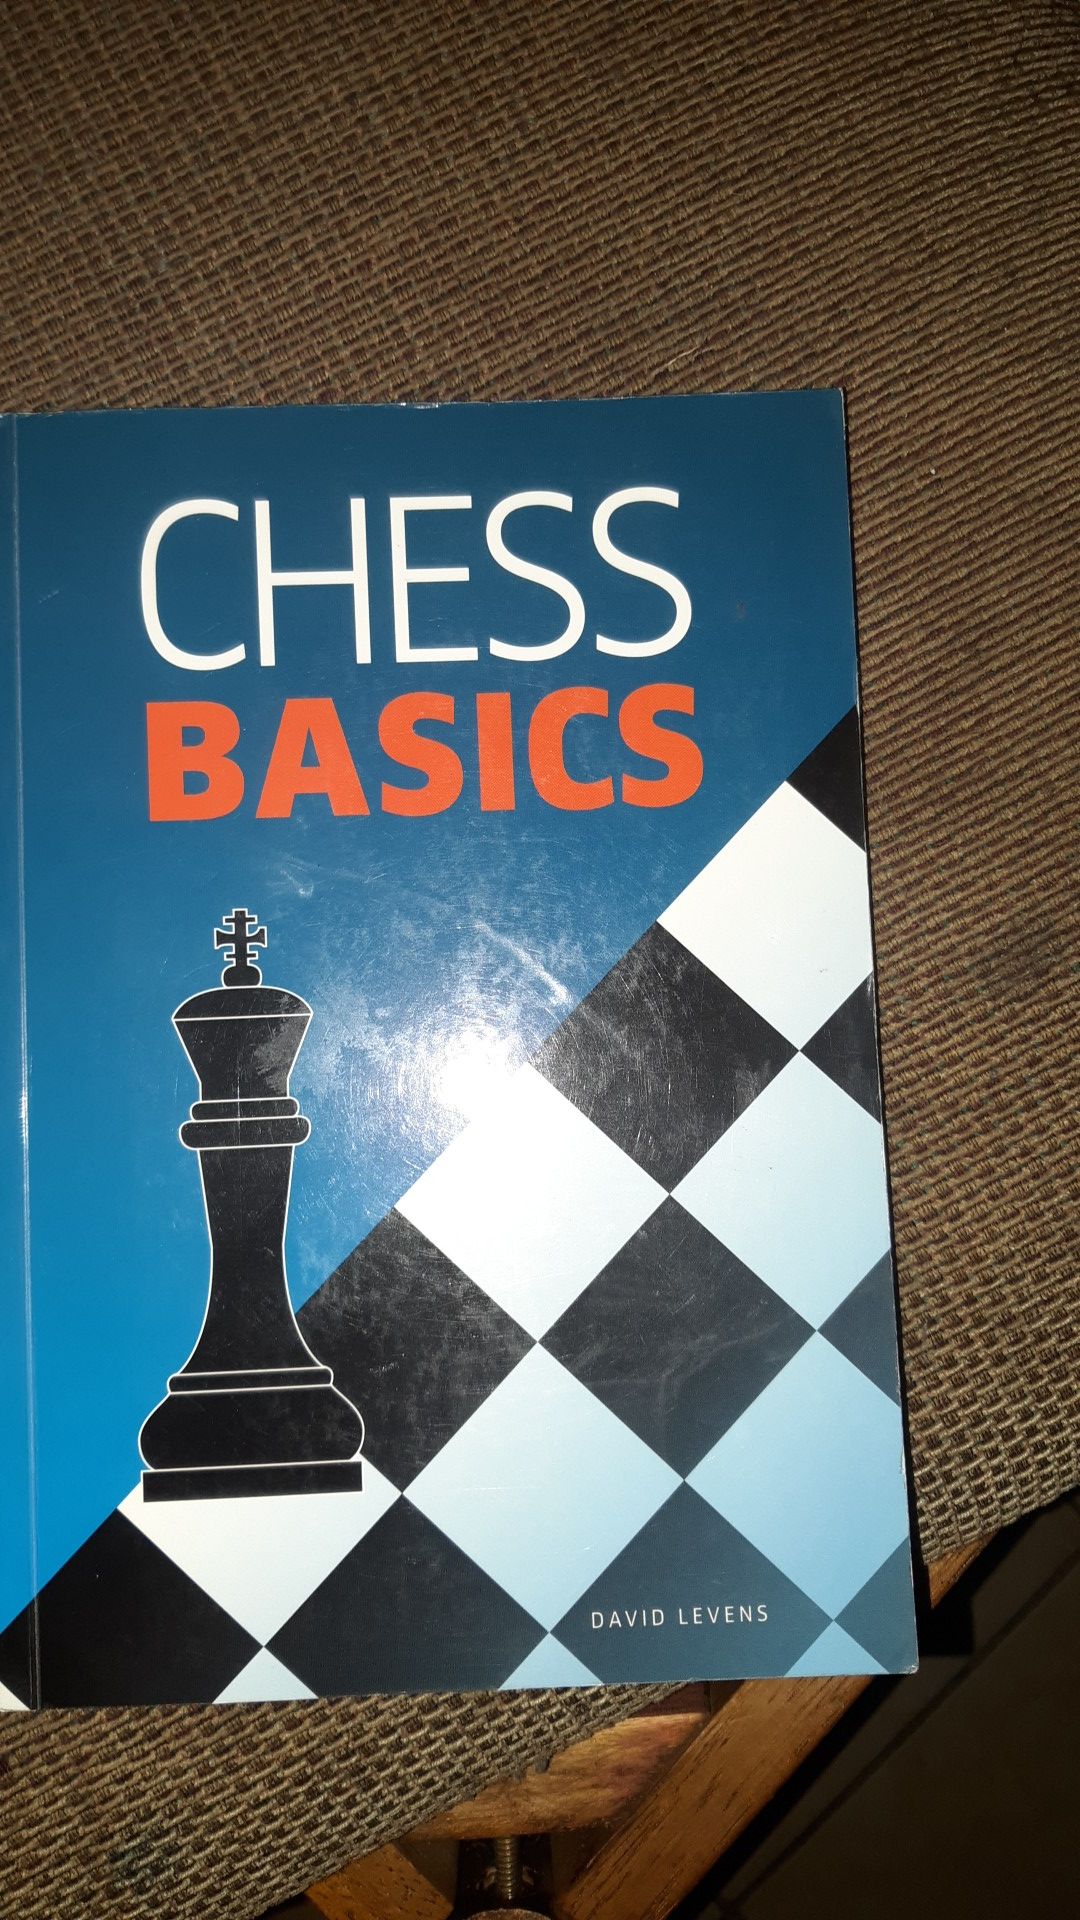 Chess basics